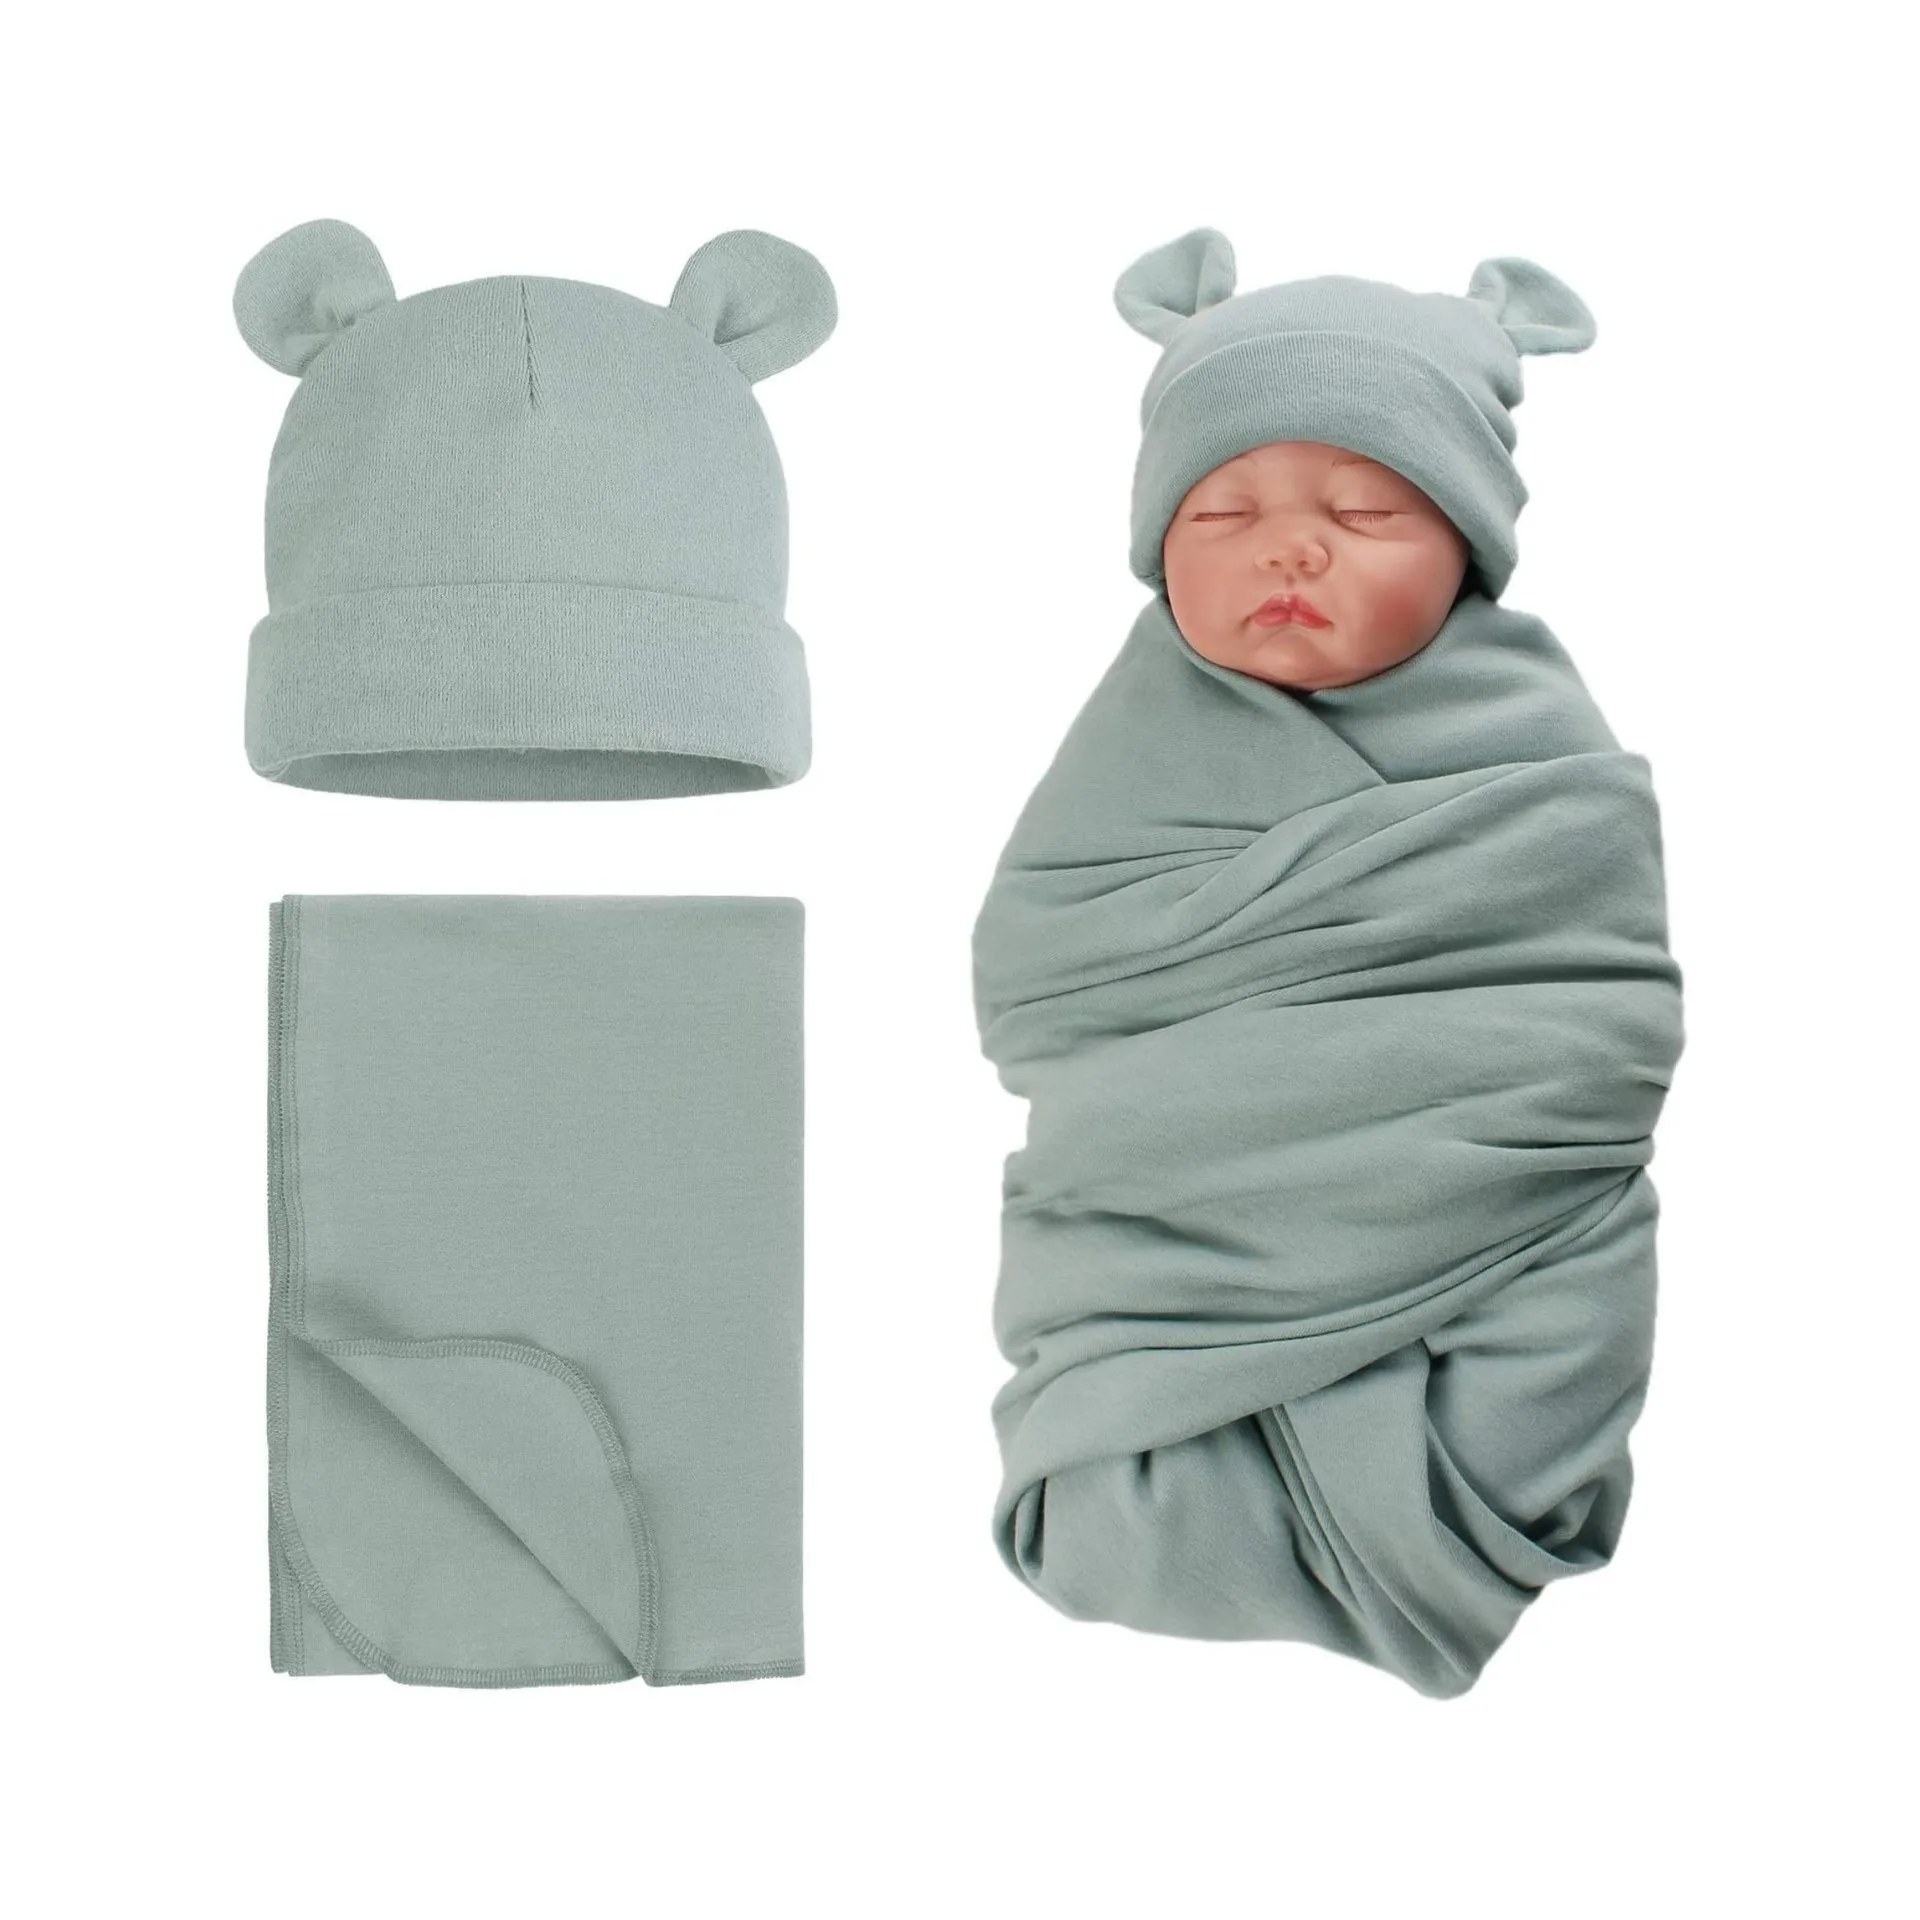 

2PCS Cotton Newborn Sleepsack Baby Swaddle Blanket Wrap Hat Set Infant New Born Sleeping Bag Candy Colors Muslin Blankets 0-12M